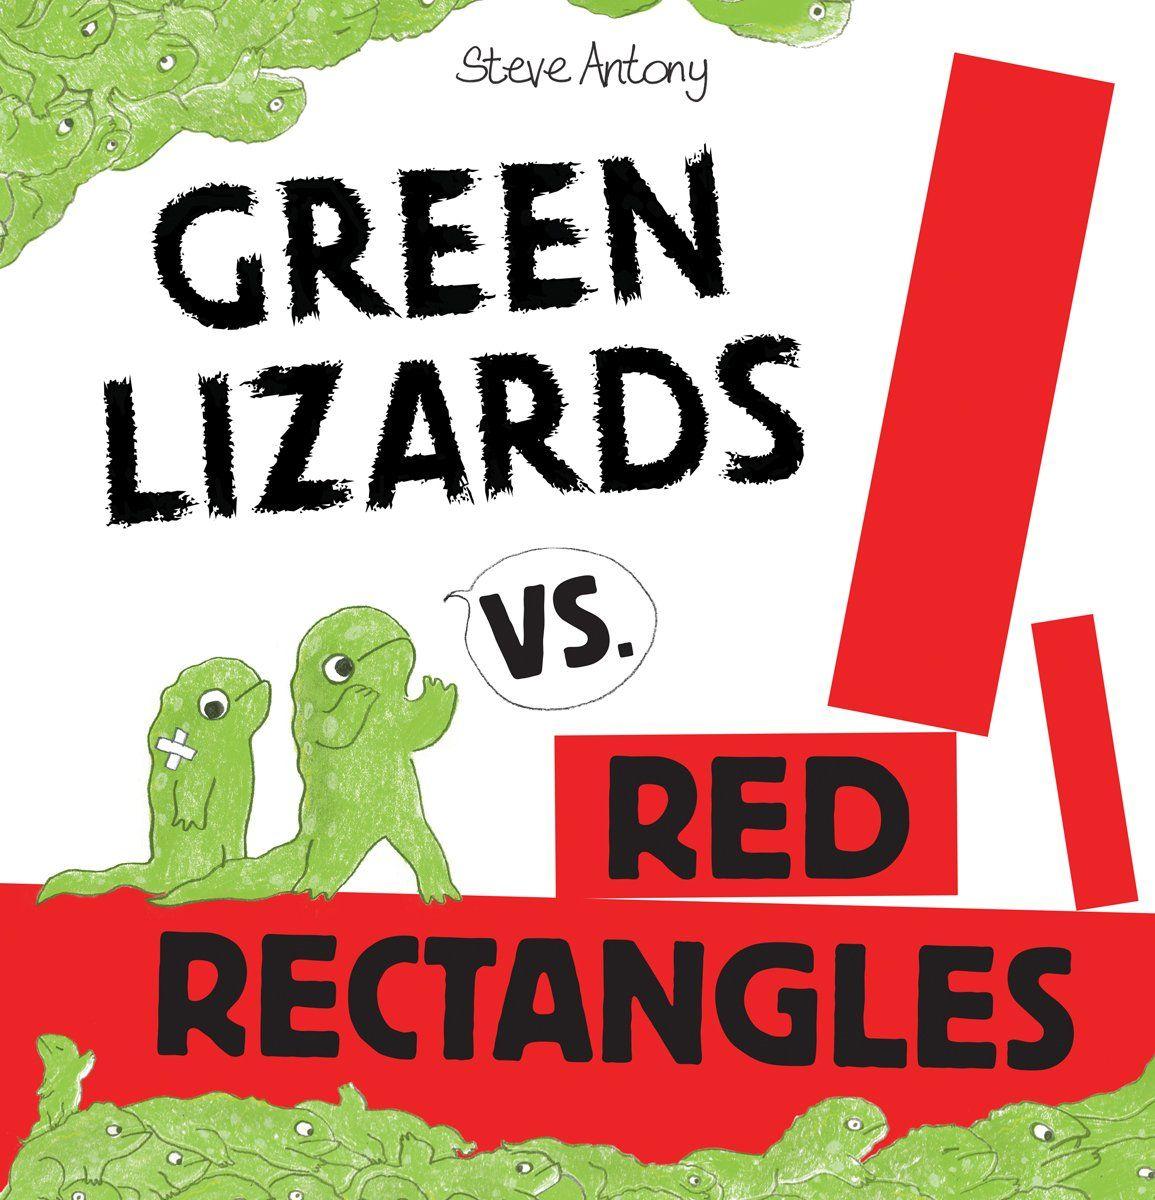 Black and Red Rectangles Logo - Green Lizards vs. Red Rectangles: Amazon.co.uk: Steve Antony ...